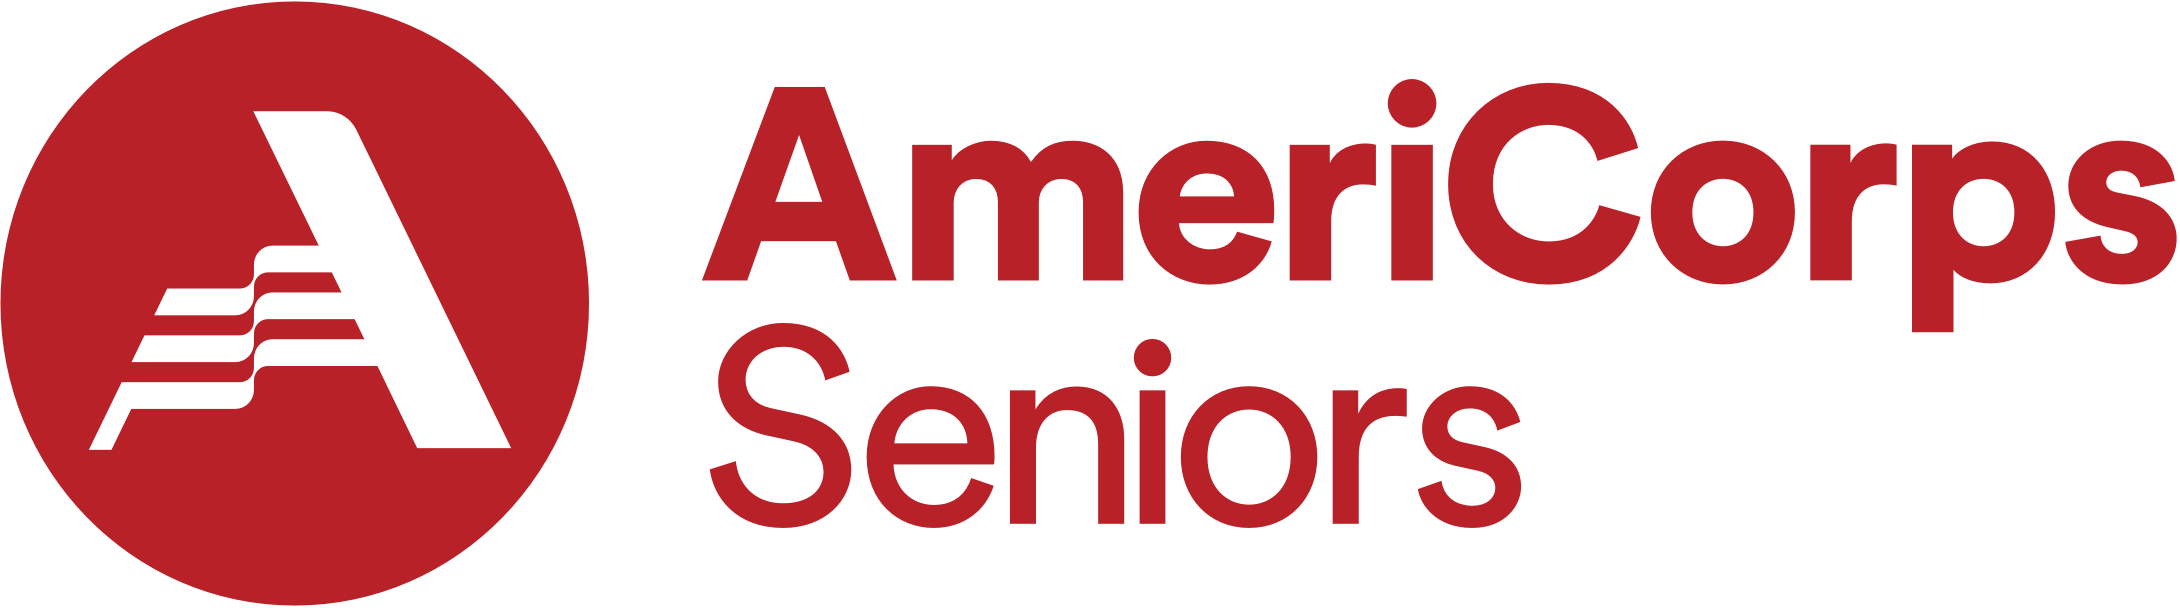 AmeriCorps Seniors - Senior Companions